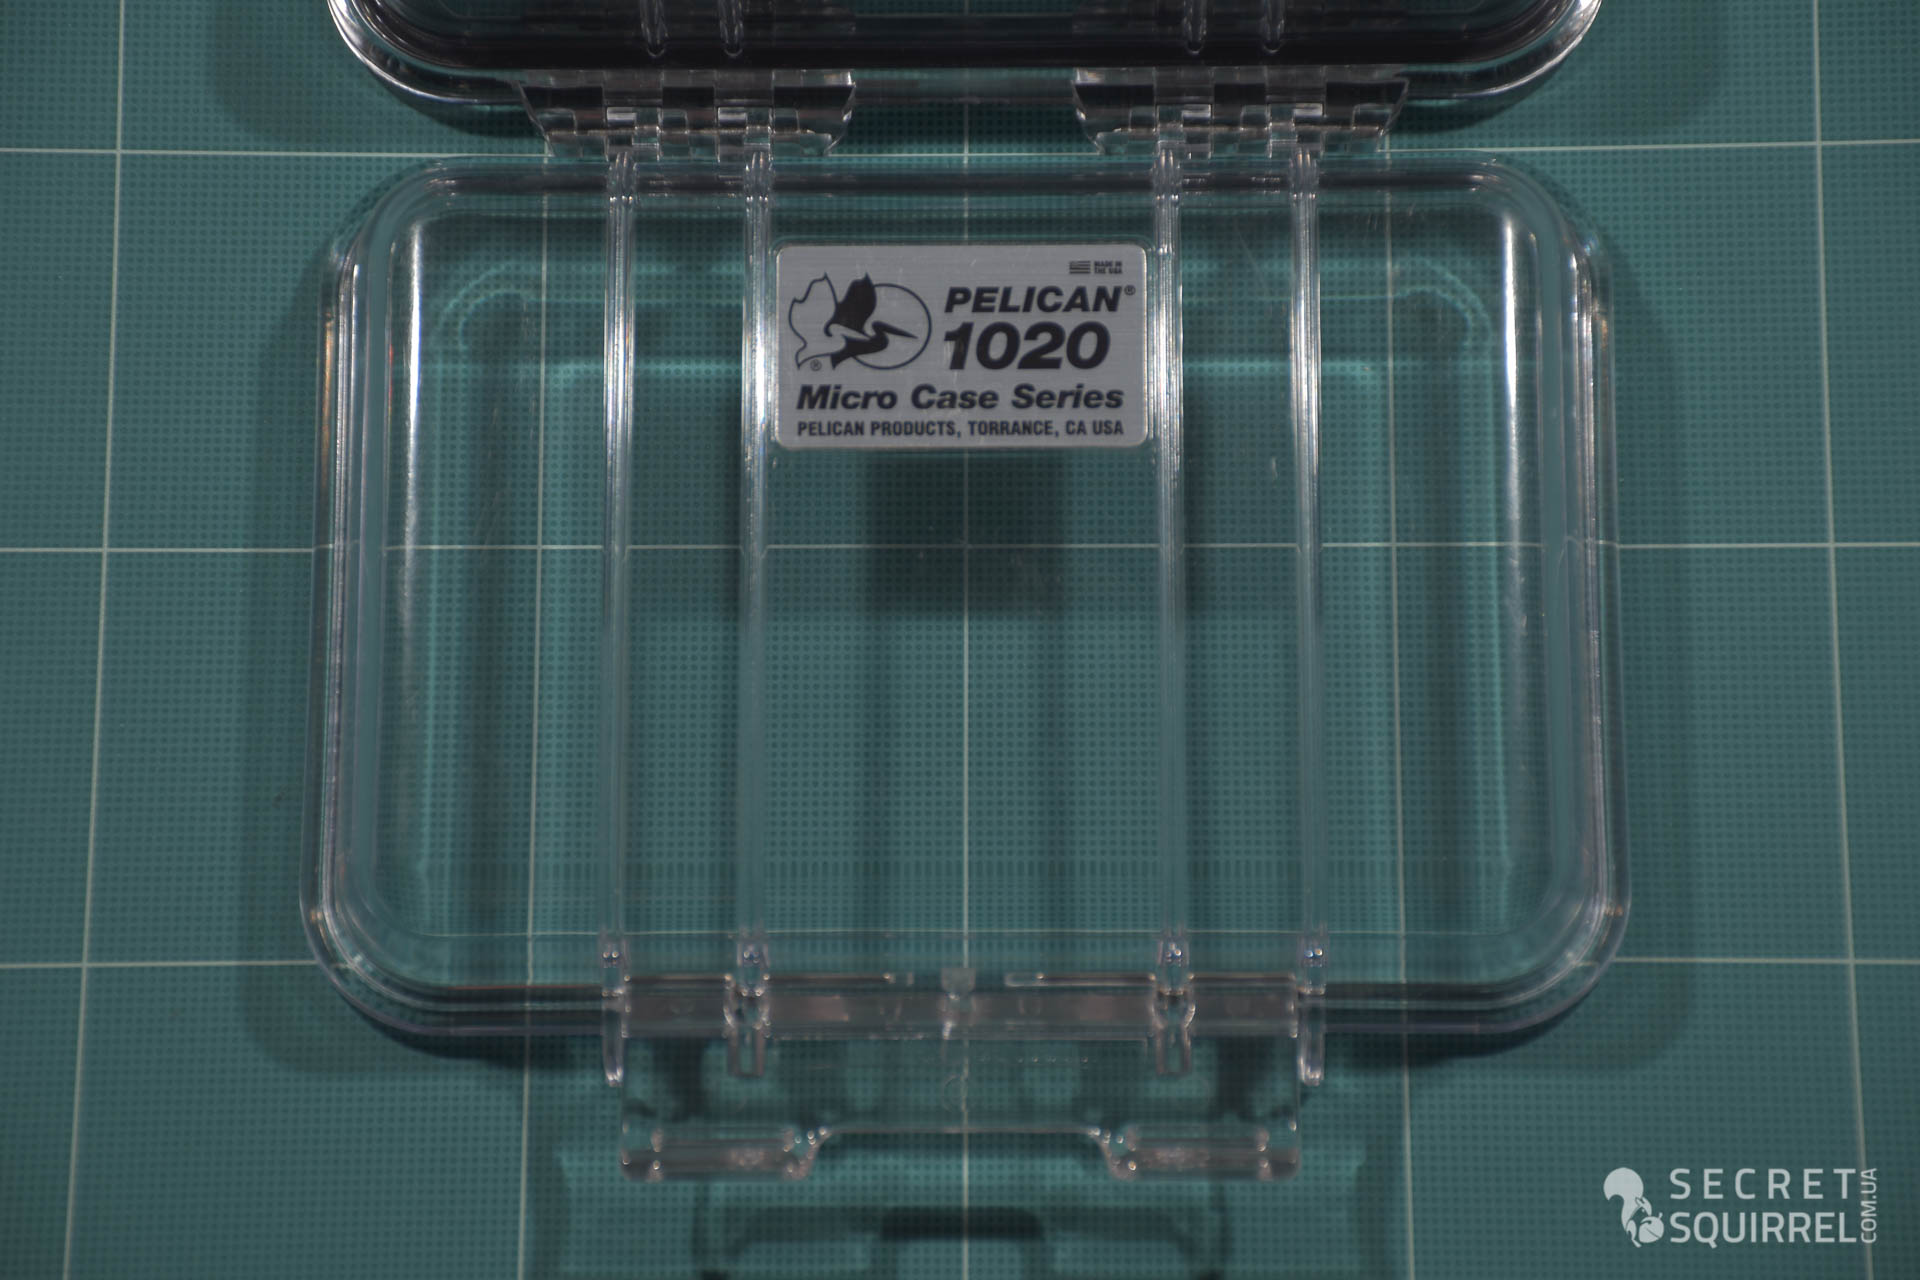 Pelican Micro Case 1020 Case Review